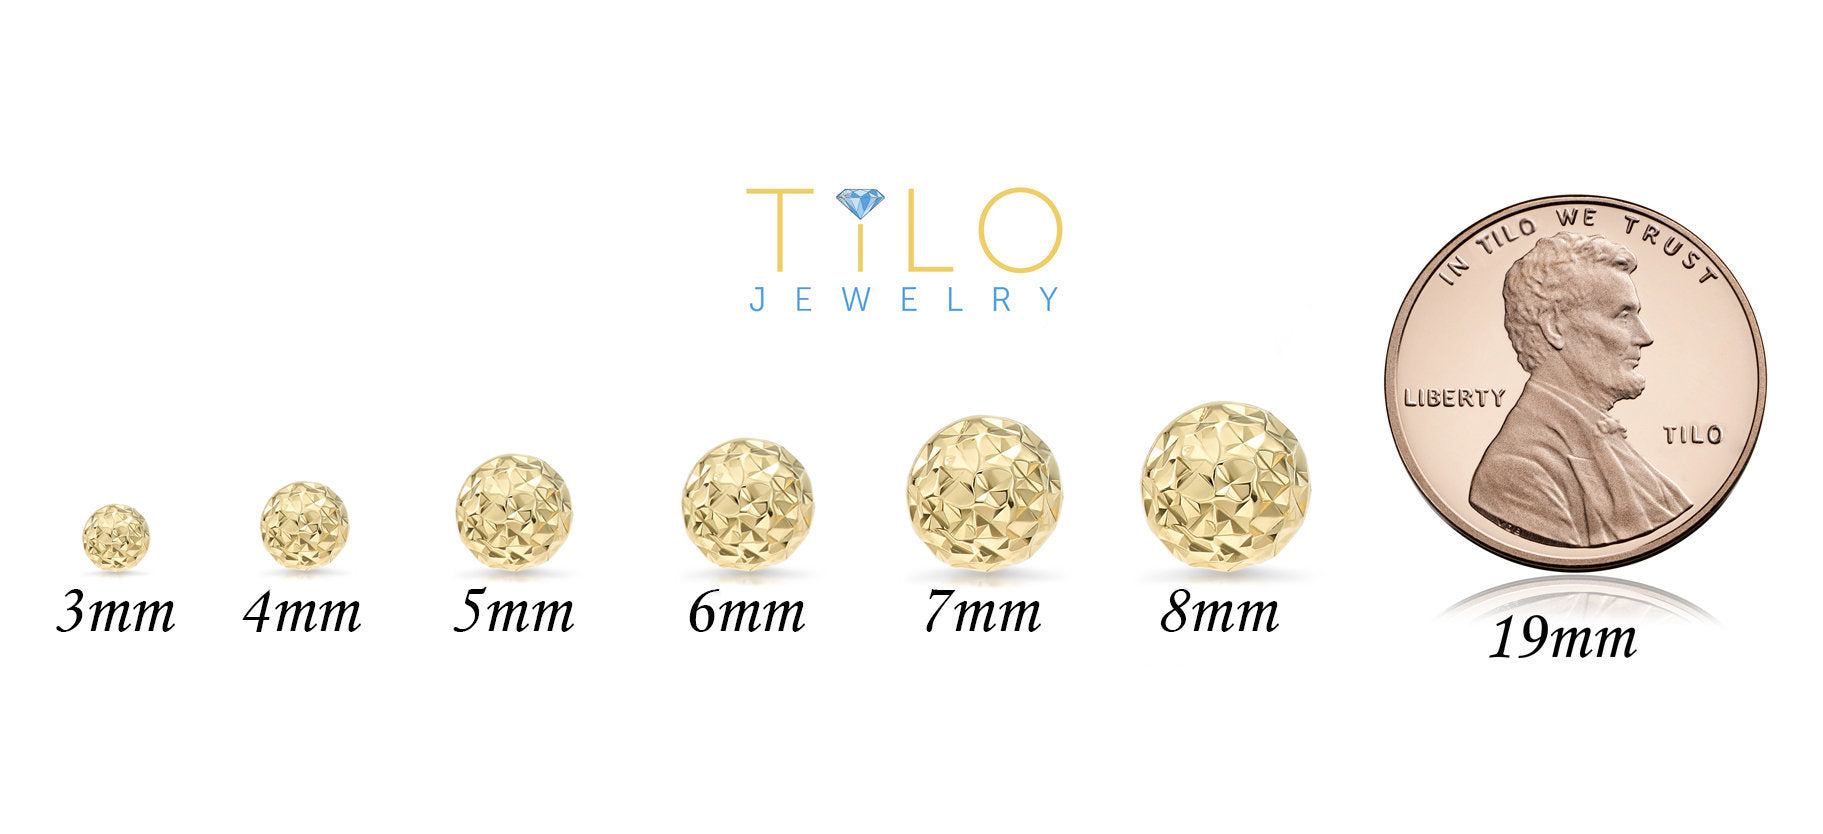 14K White Gold Sparkle Ball Stud Earrings, Hand Engraved Diamond Cuts